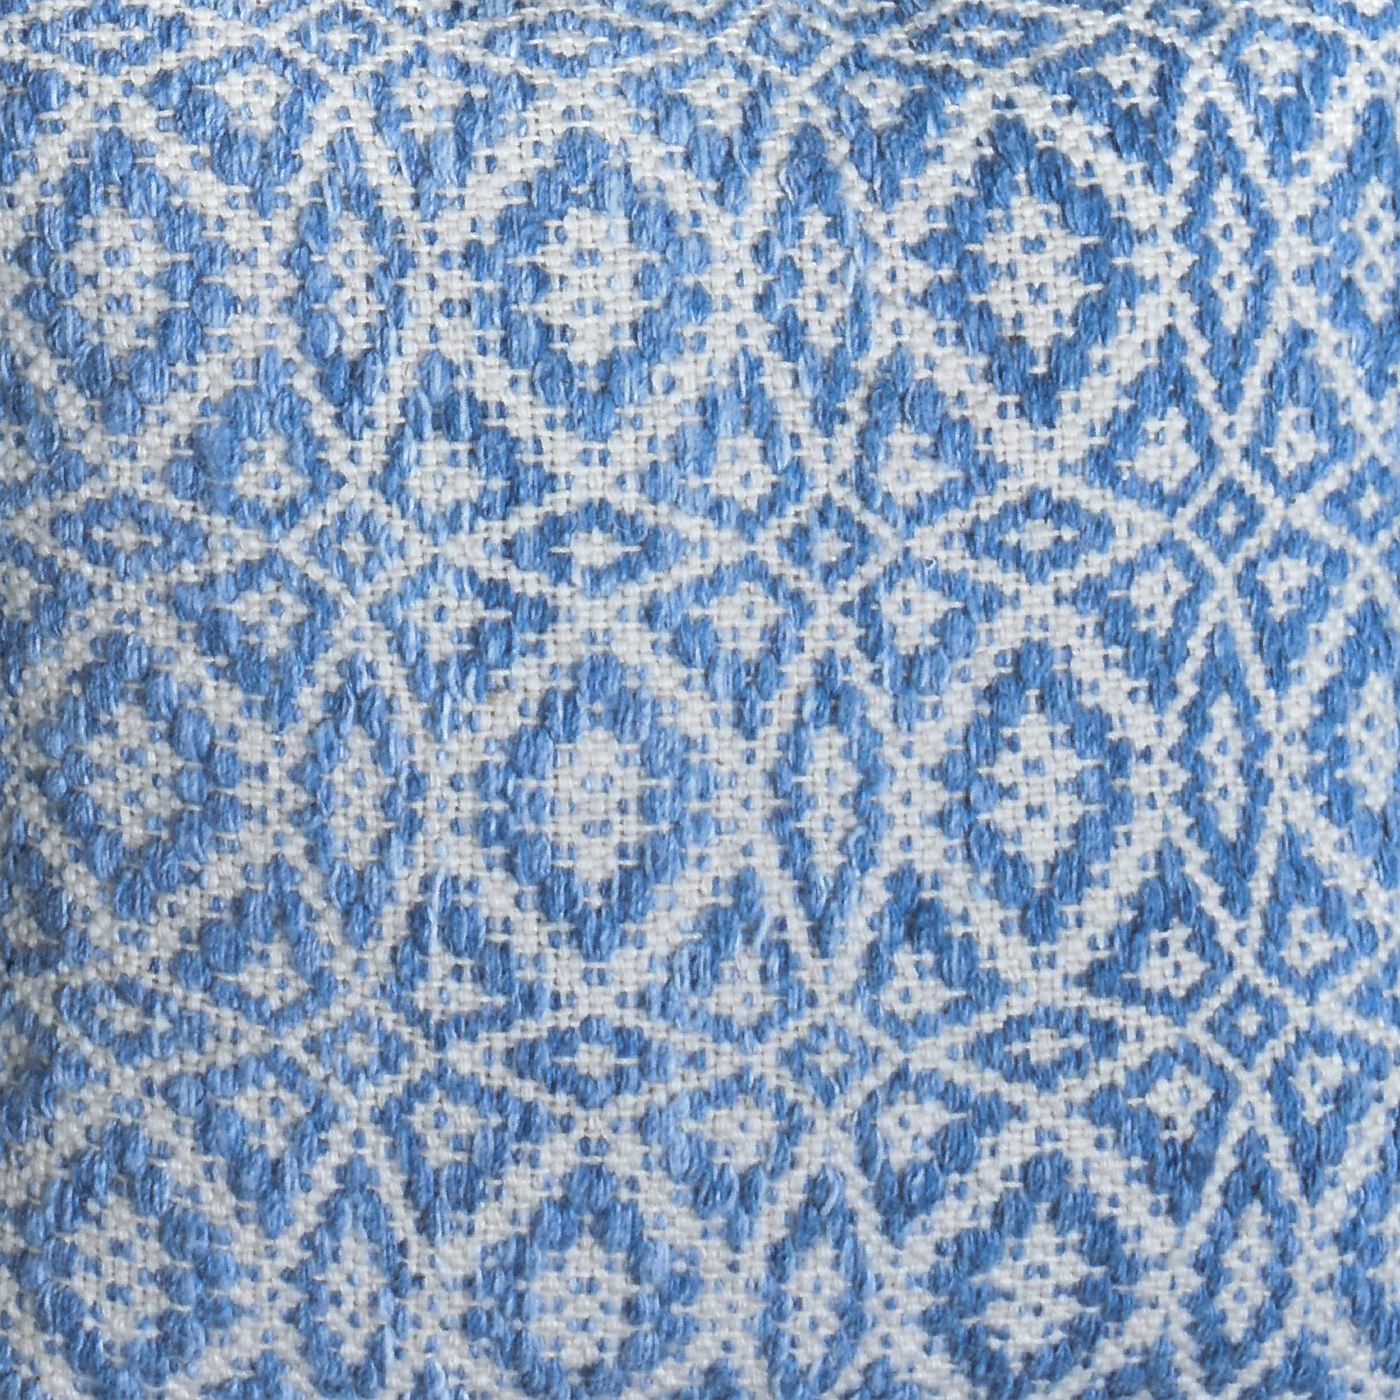 Maderia Pillow, Pet, Blue, Pitloom, Flat Weave